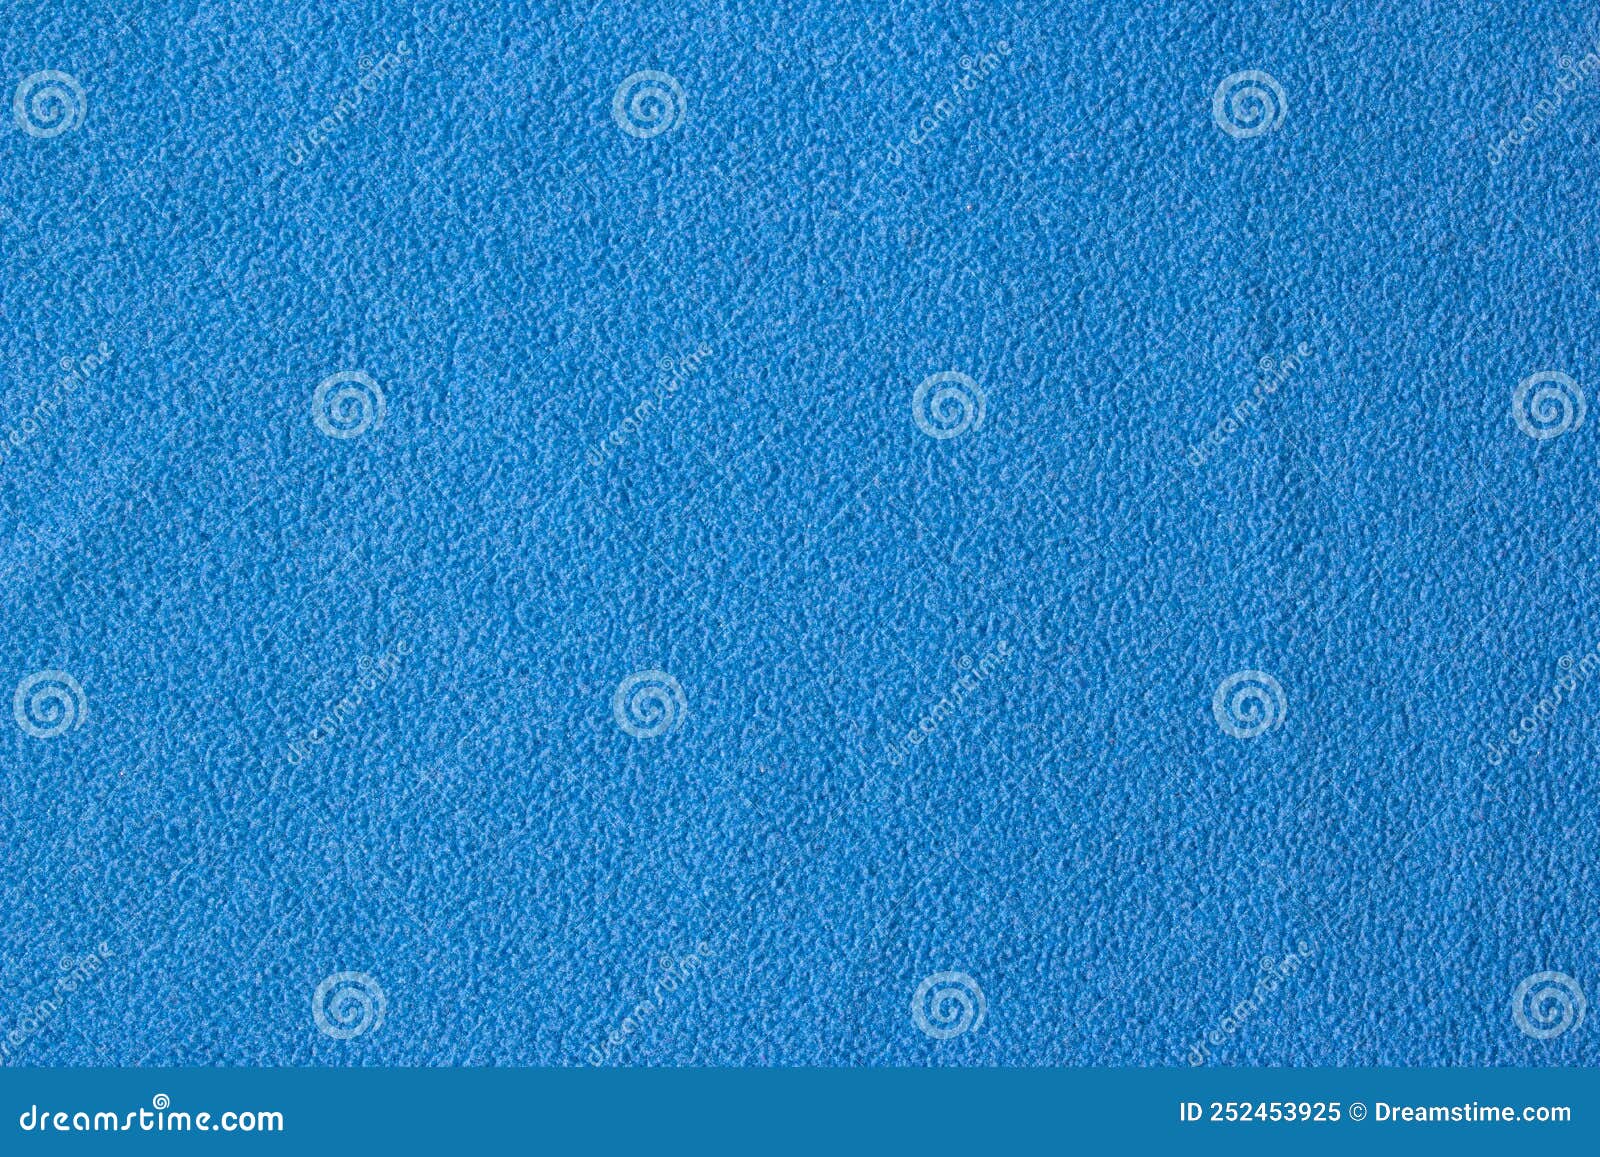 Background Blue Woolen Fabric. Blue Flannel Fabric Texture Background ...